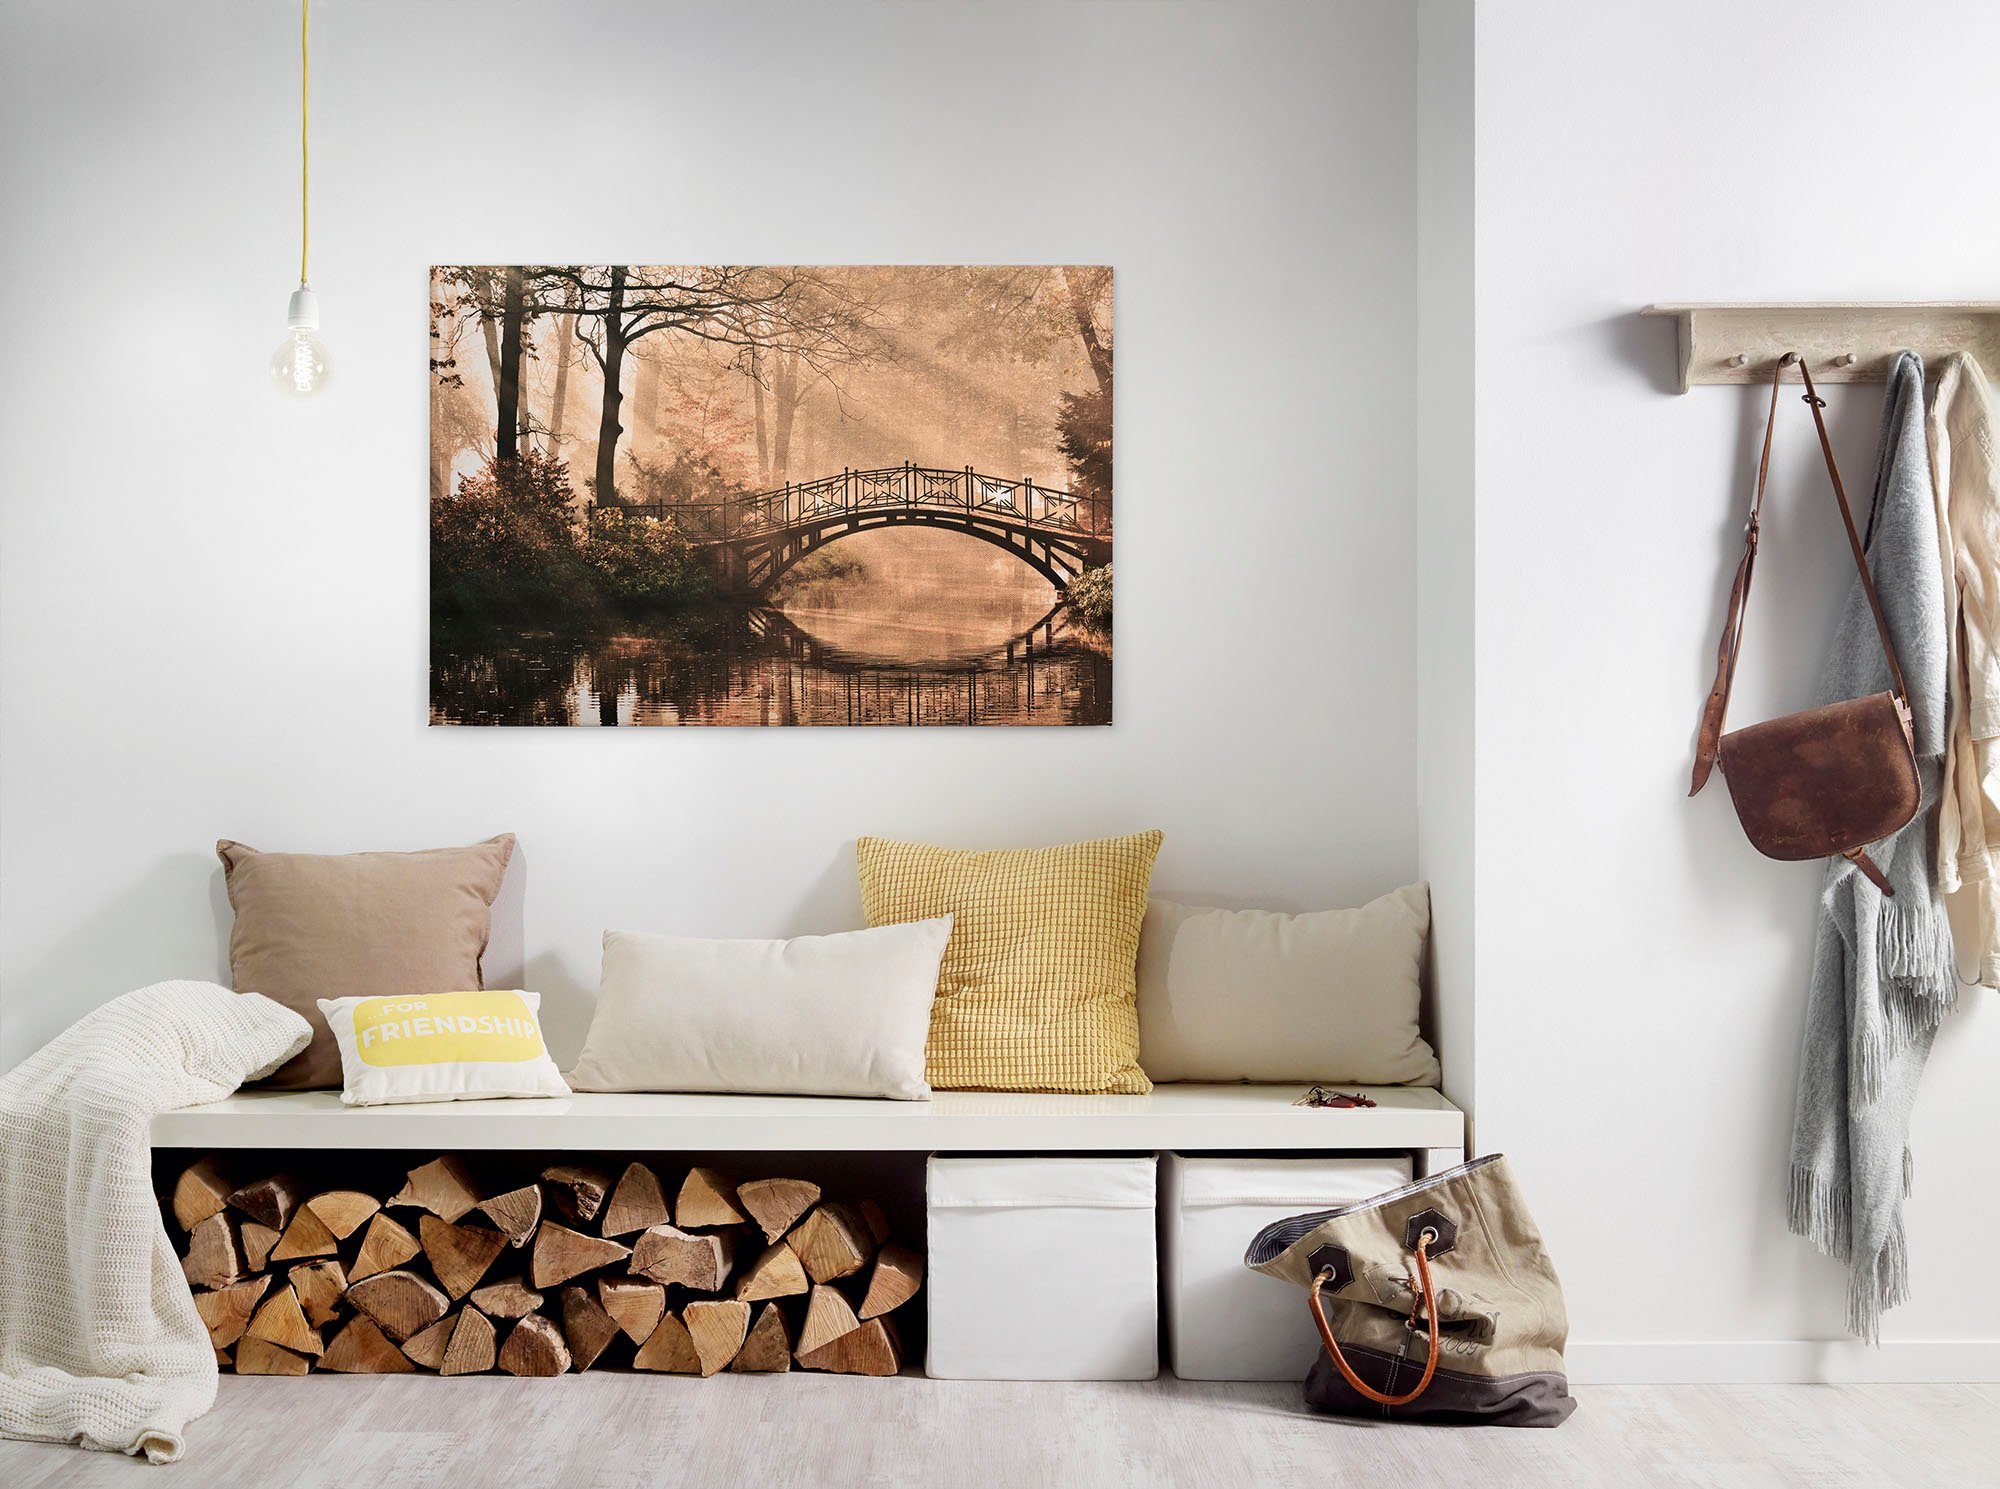 Création Leinwandbild Brücke A.S. Park Bridge, Keilrahmen braun mit St), Bild beige, Wald (1